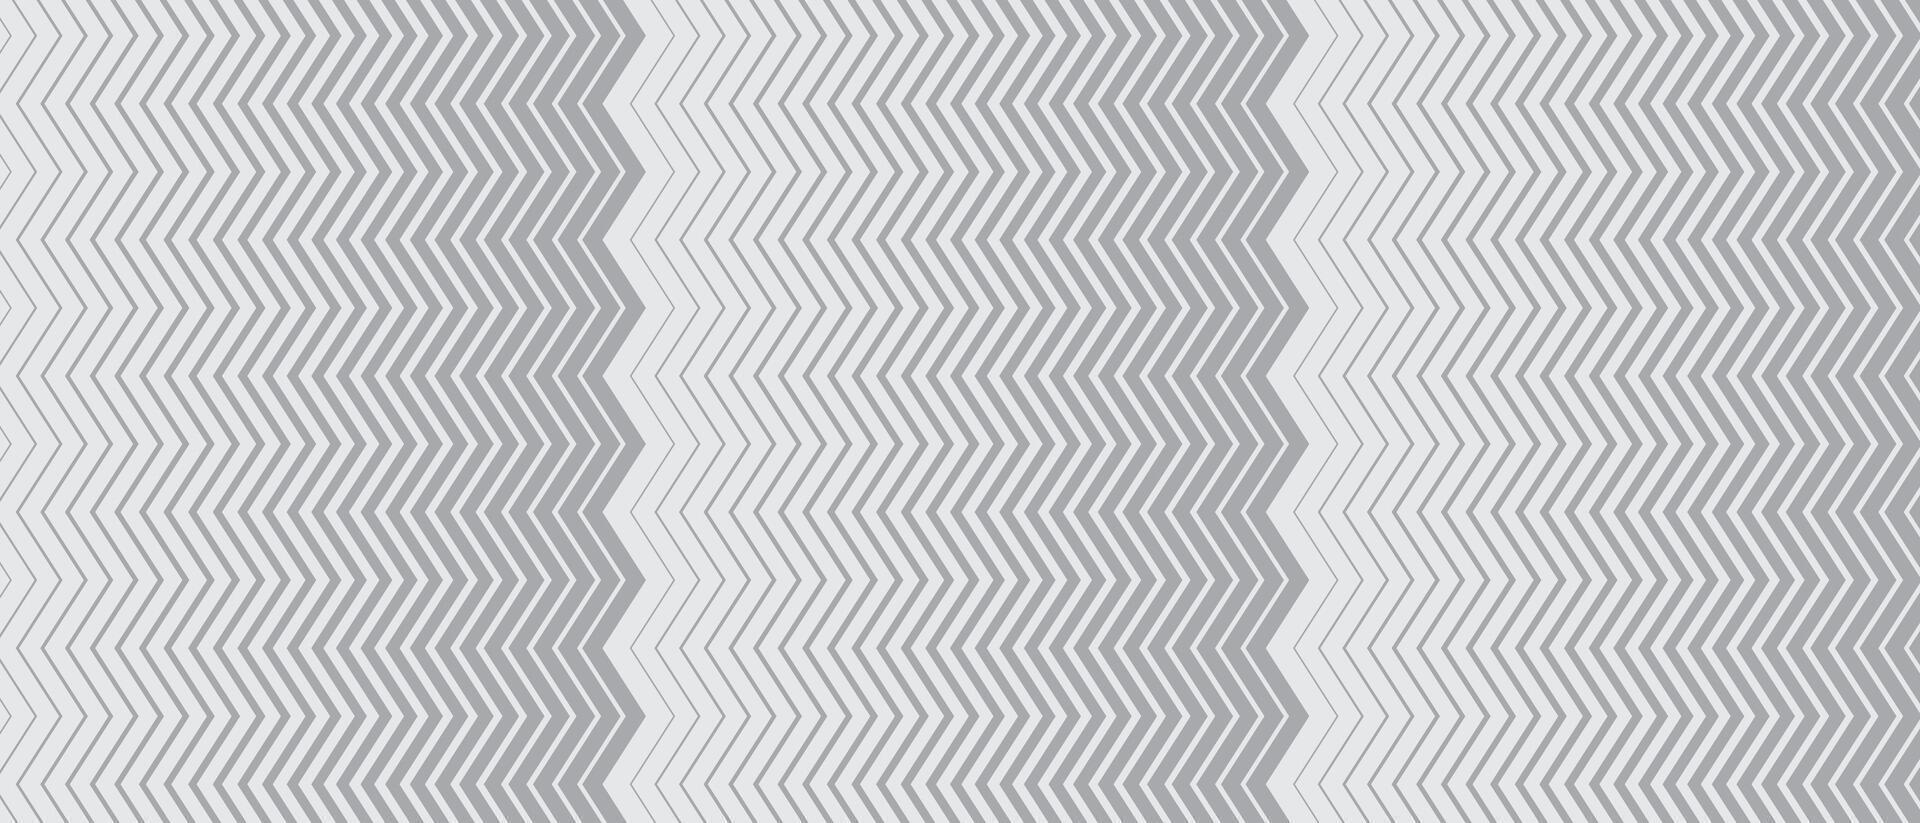 abstrakt geometrisk linje Vinka mönster vektor illustration.